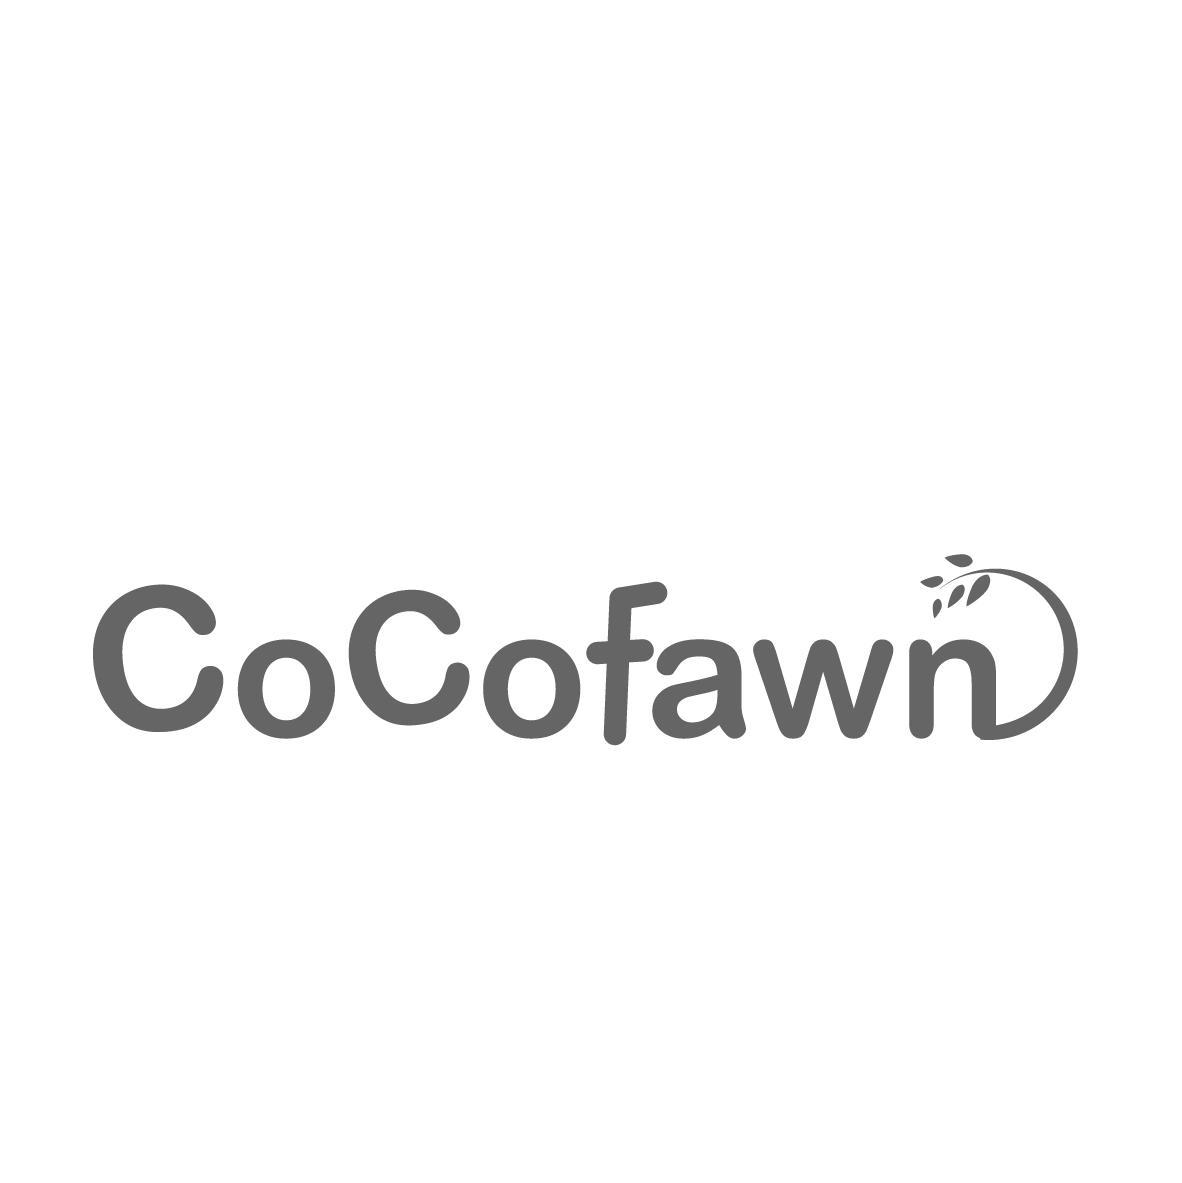 35类-广告销售COCOFAWN商标转让